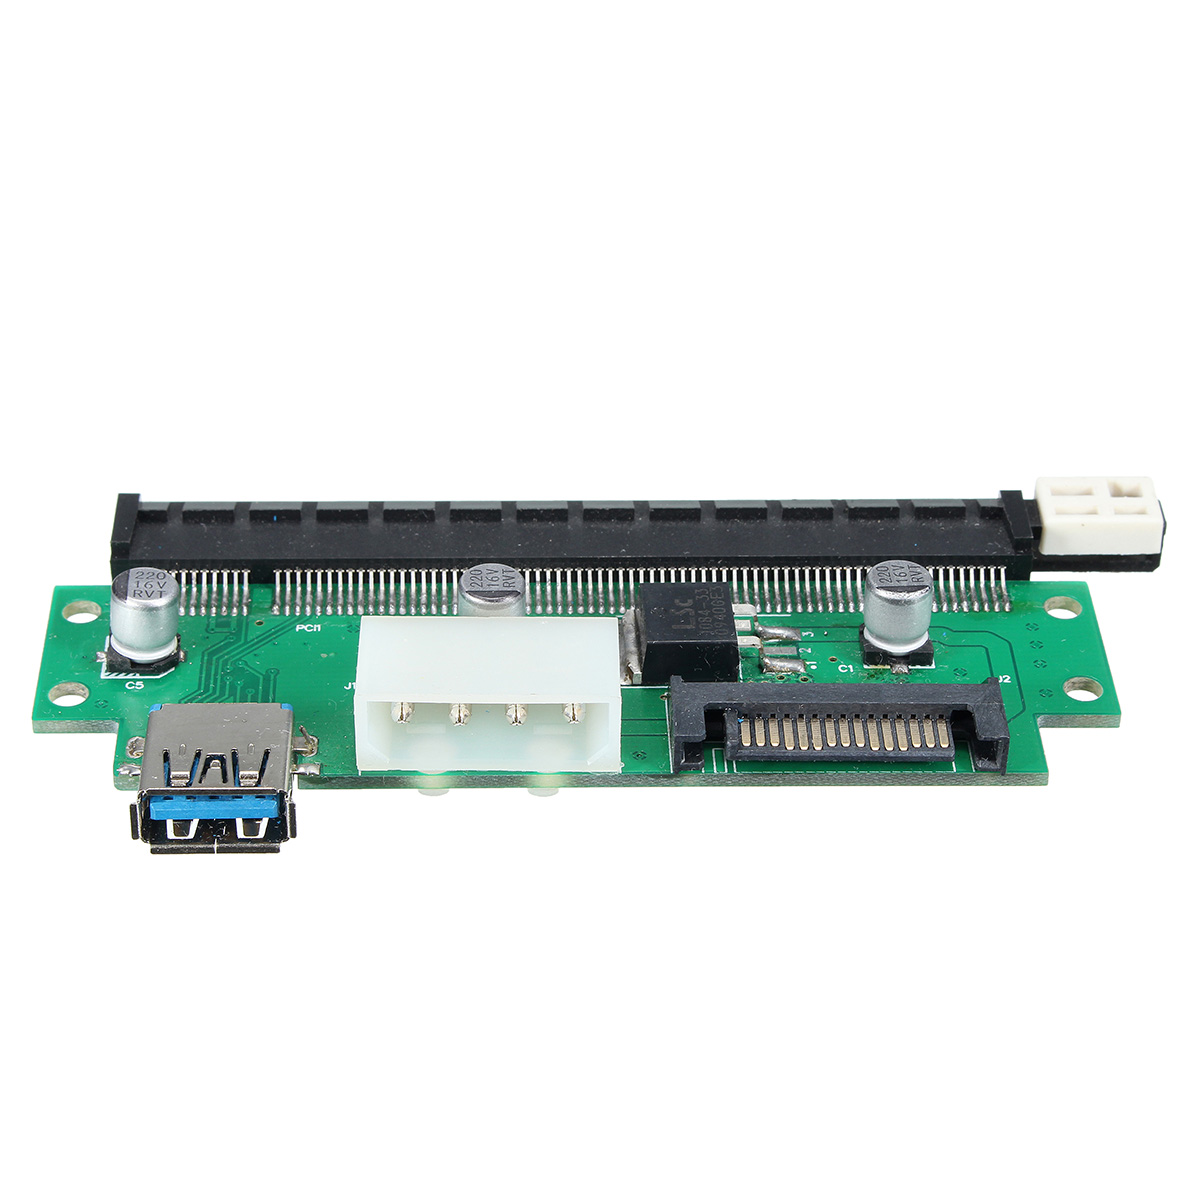 PCI-E-Extender-Card-Adapter-PCI-Express-1X-to-16X-Extender-Mining-Rig-60cm-USB-30-6Pin-Power-Mining--1890548-6